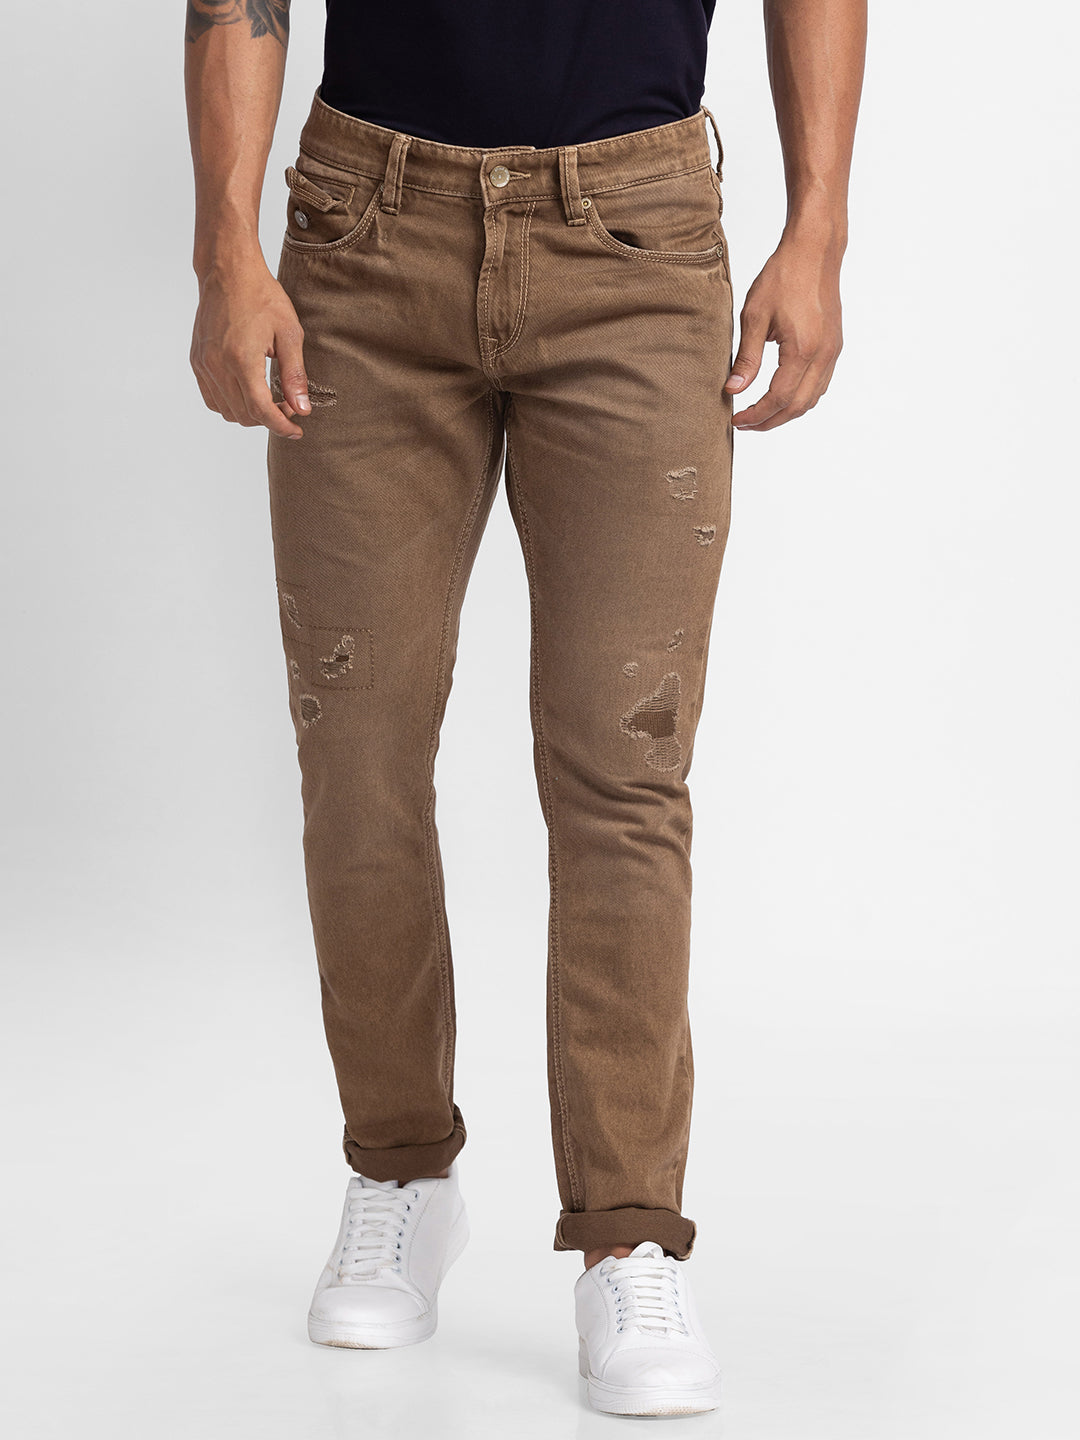 Spykar Khaki Cotton Slim Fit Narrow Length Jeans For Men (Skinny)